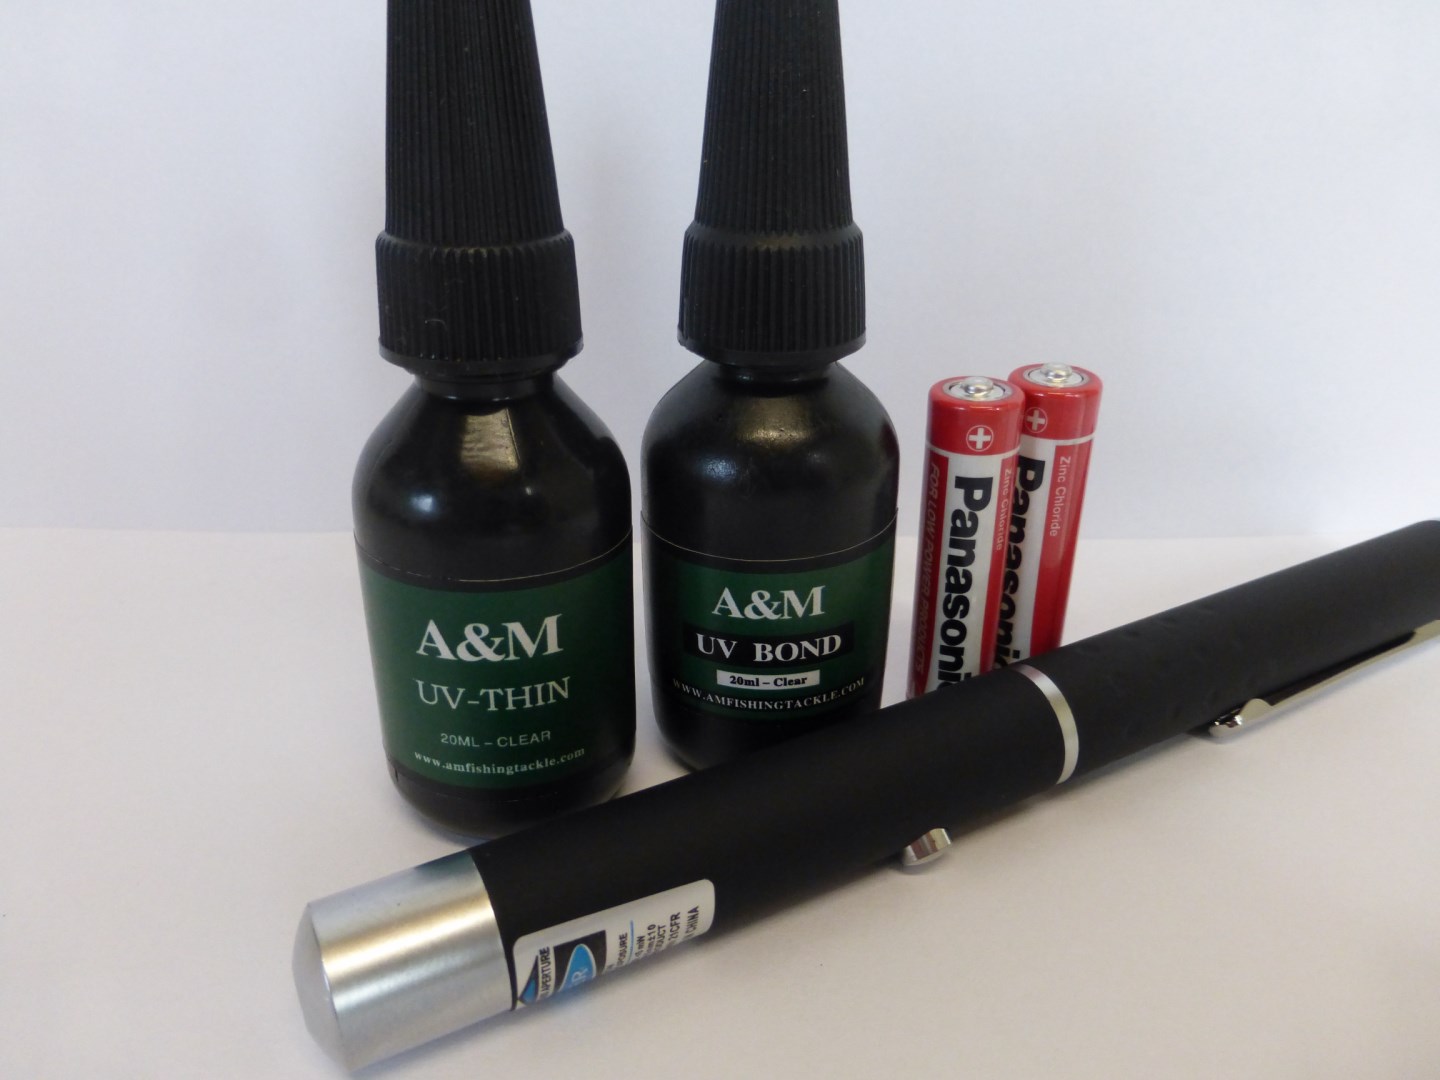 A&M UV Bond/UV Thin Complete set